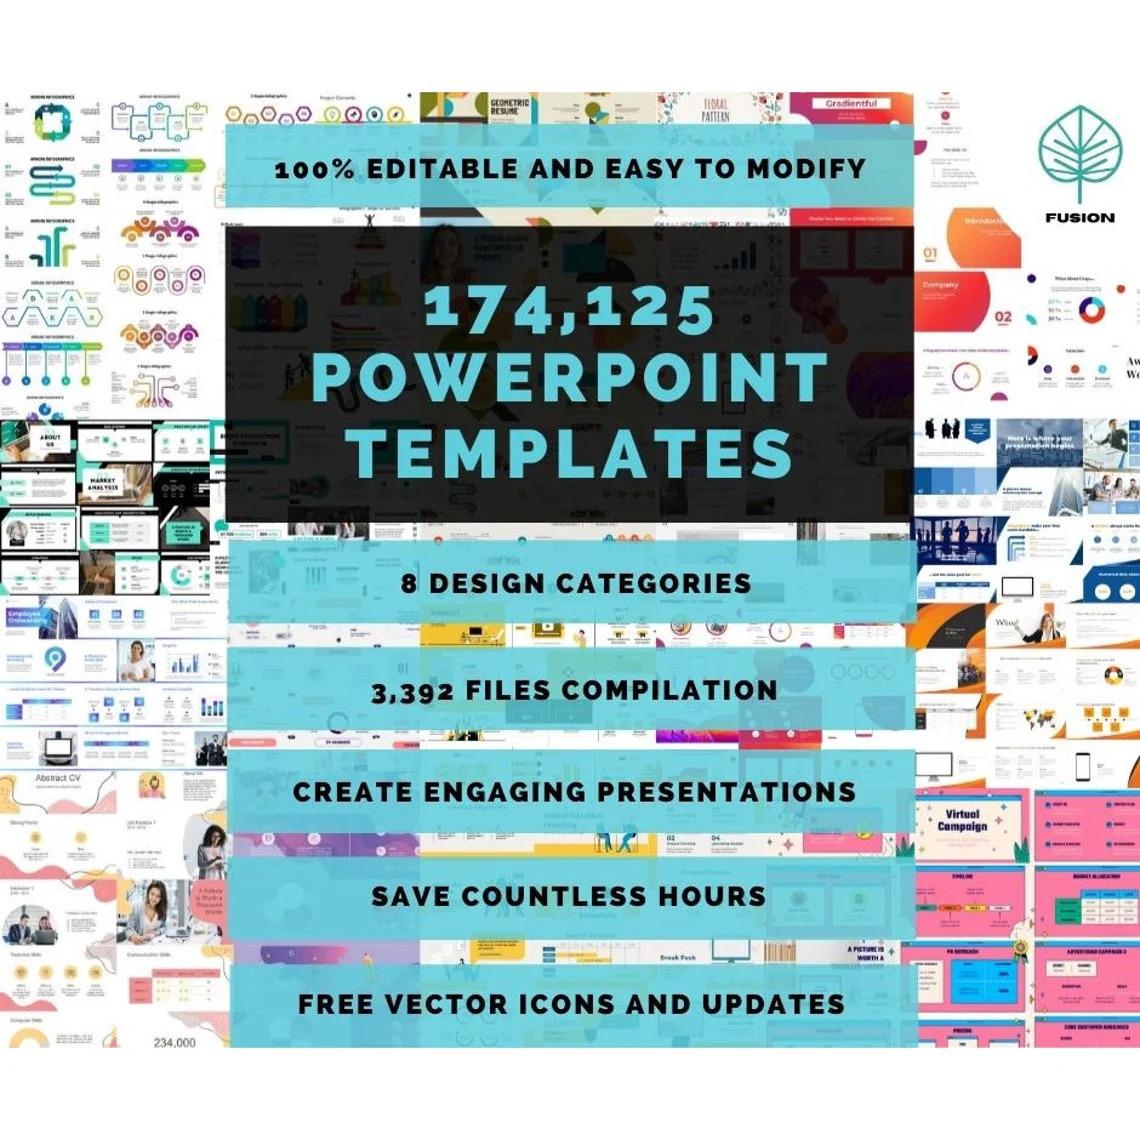 174,125 PowerPoint Templates